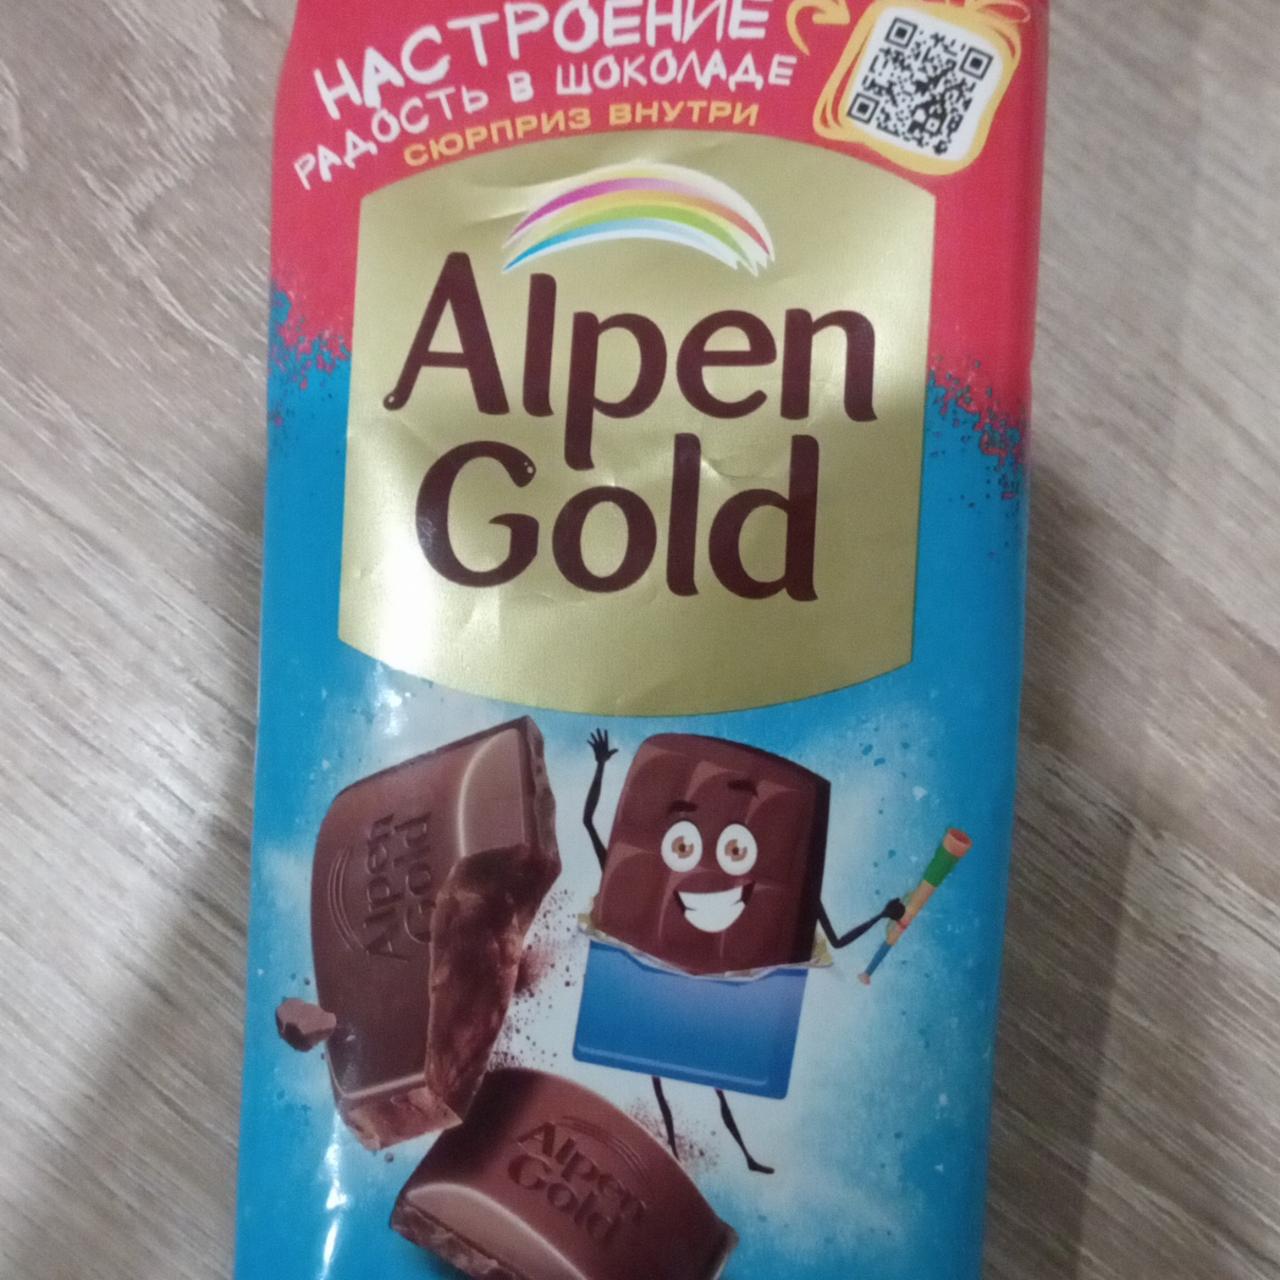 Фото - Шоколад молочный Alpen Gold